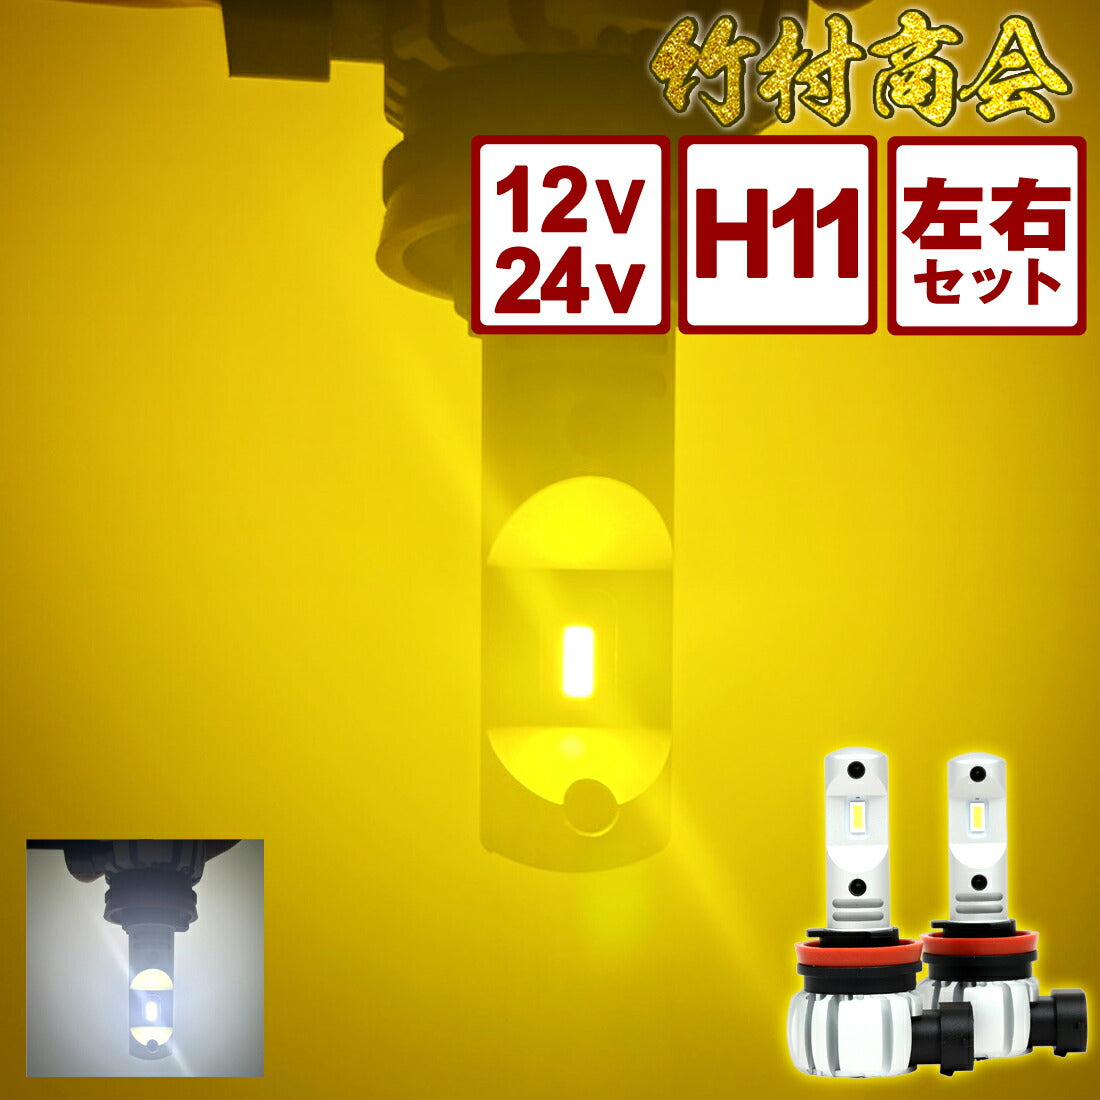 24v led H11 フォグランプ用 LEDバルブ (take147)